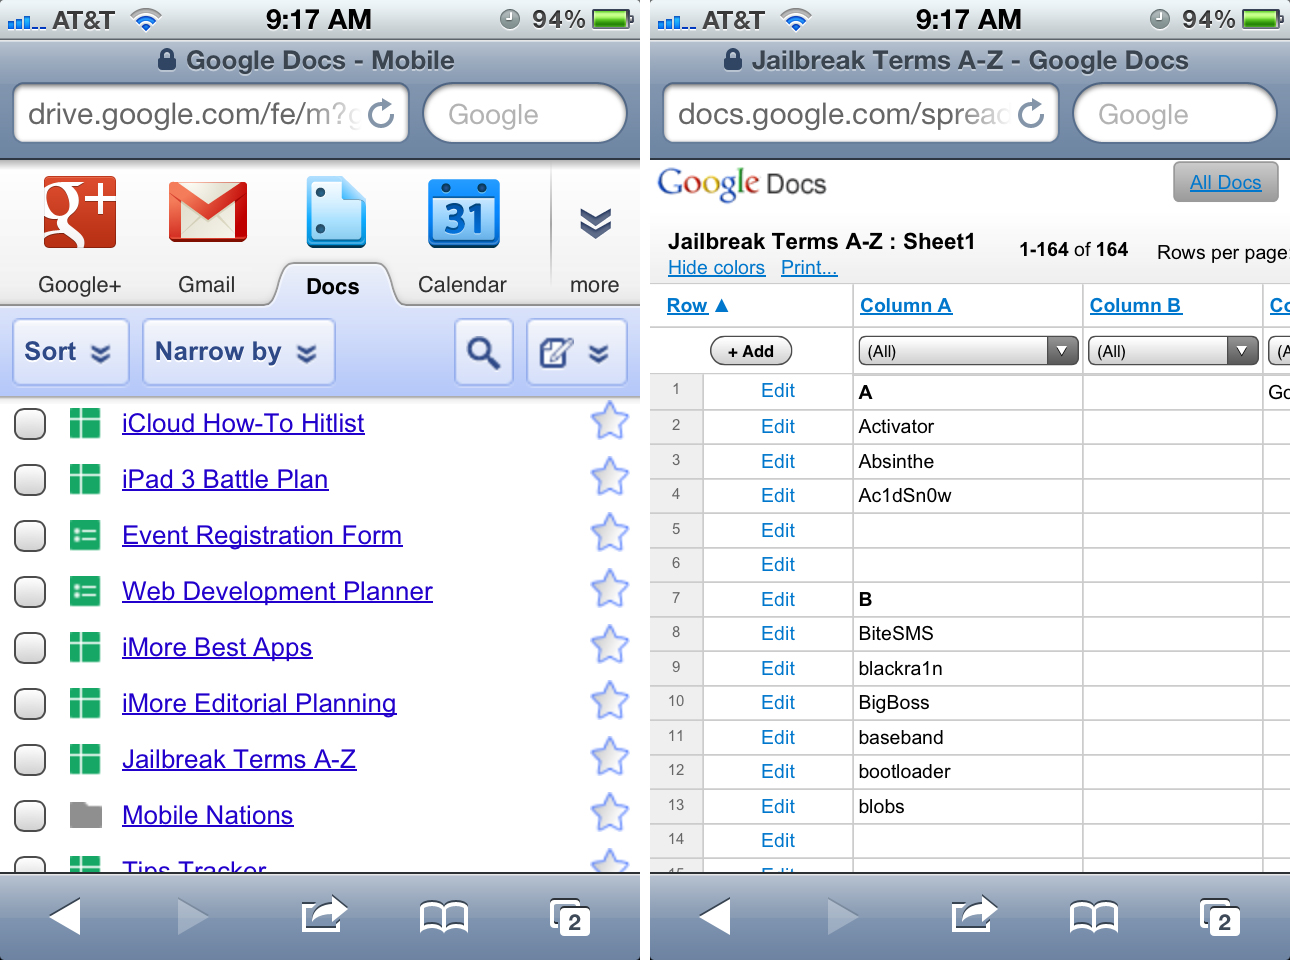 Access Google Drive on your iPhone and iPad via Mobile Safari